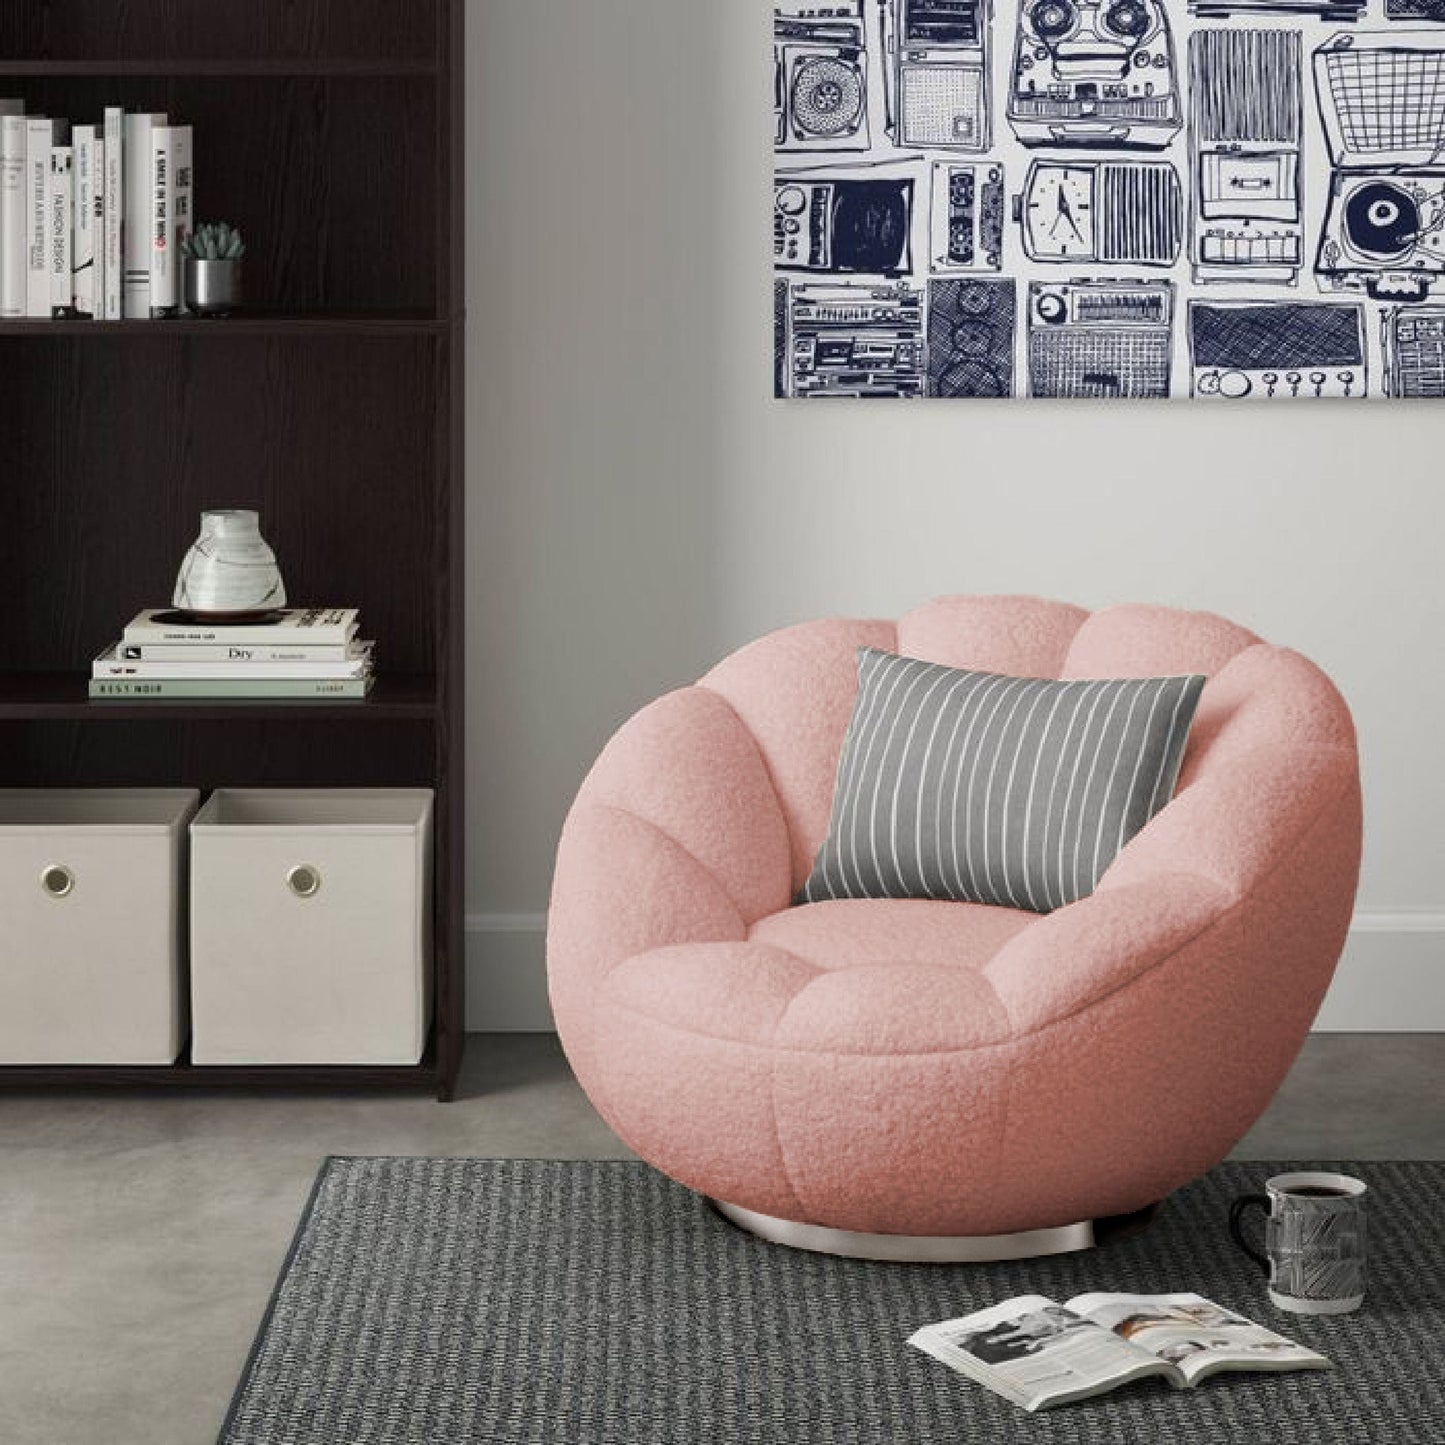 VIG Furniture Modrest Dacano Pink Sherpa Accent Chair